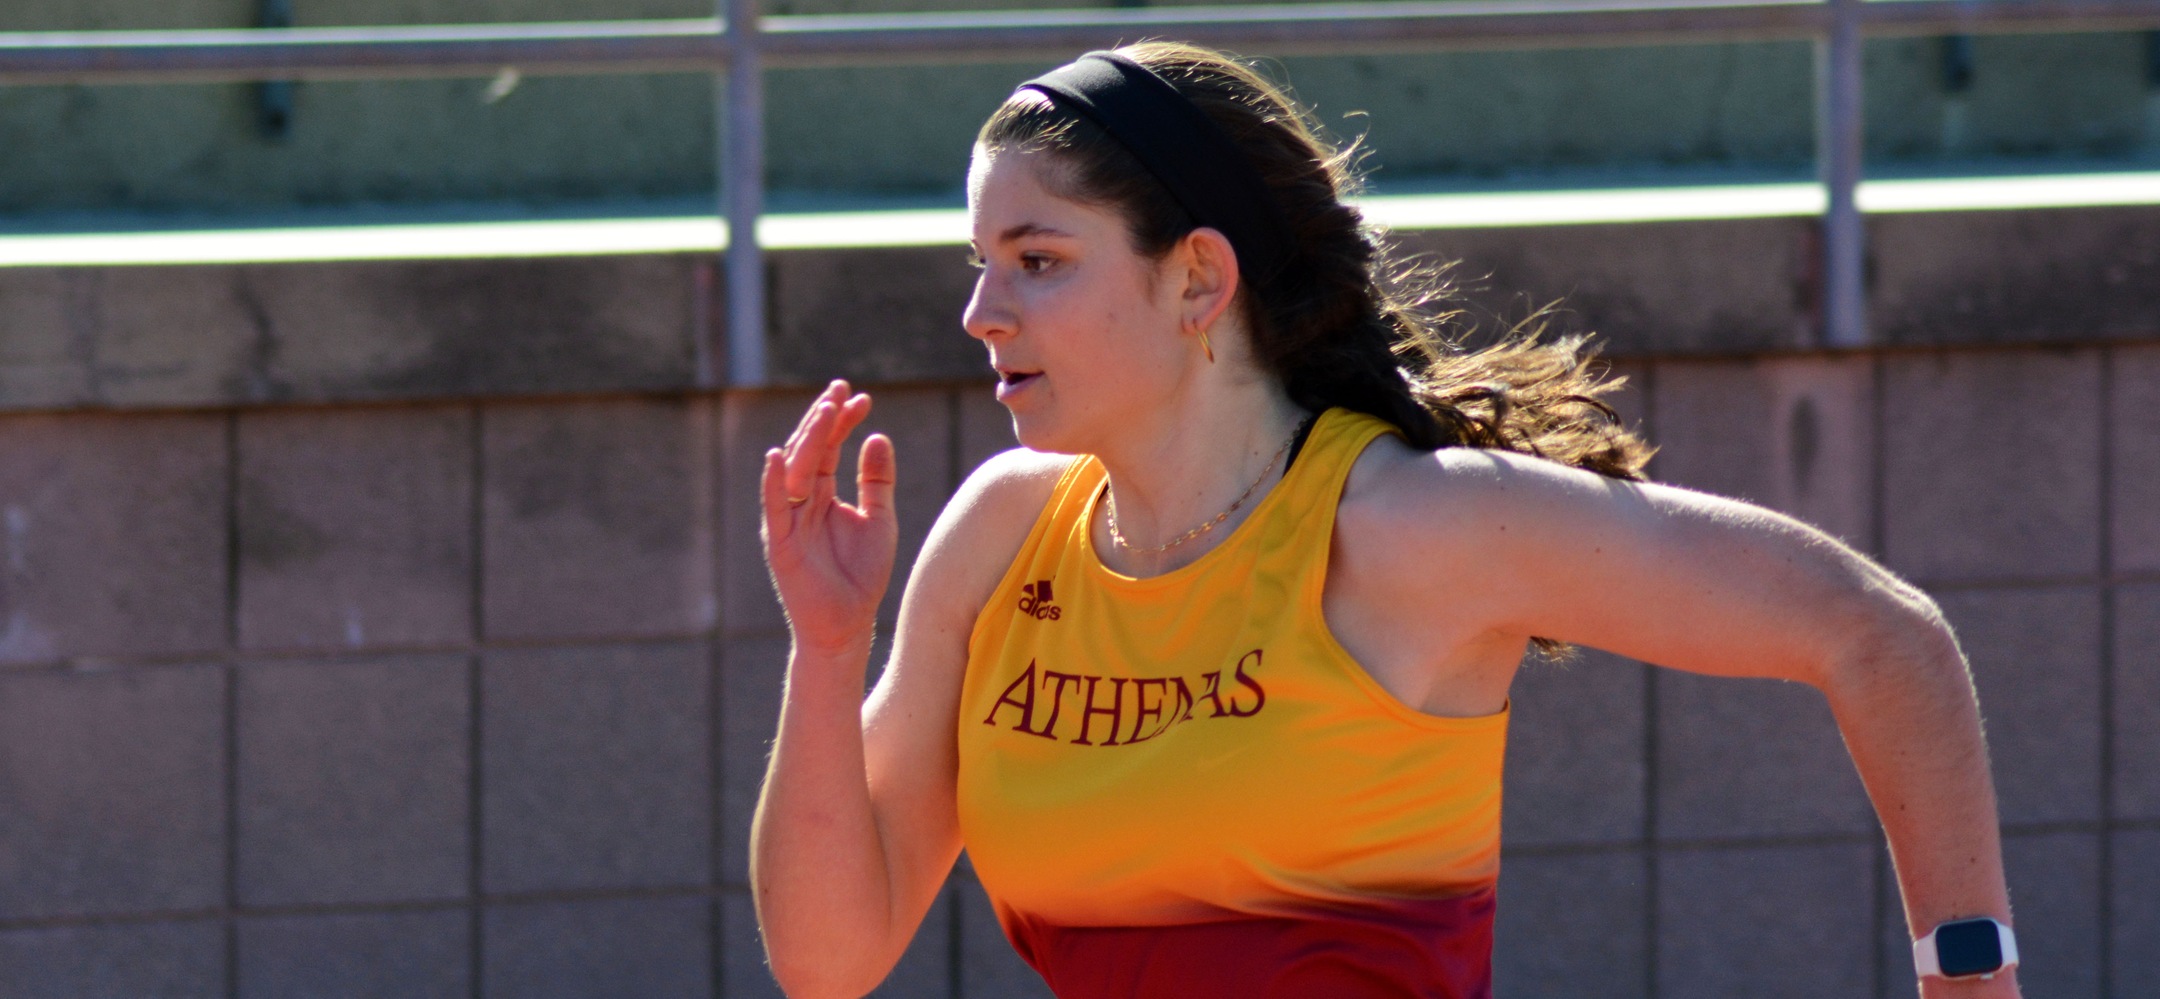 Caroline DelVecchio on her way to a win in the 60-meter hurdles